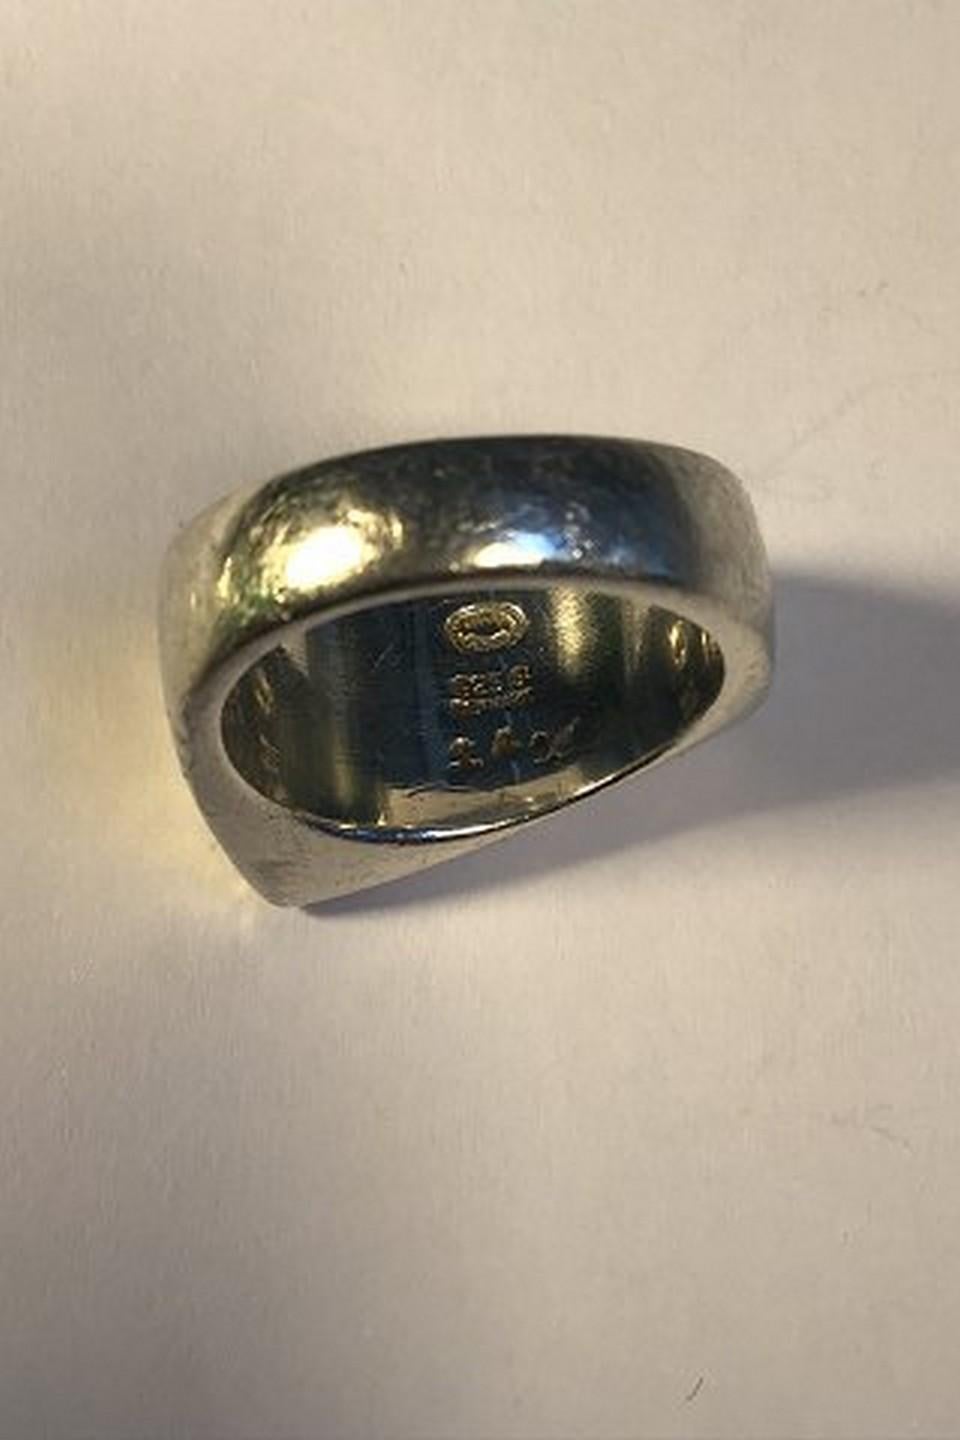 Georg Jensen Sterling Silver Ring No 141 Plaza Henning Koppel Ring Size 48/ US 4 1/2 Weight 12.3 gr/0.43 oz.